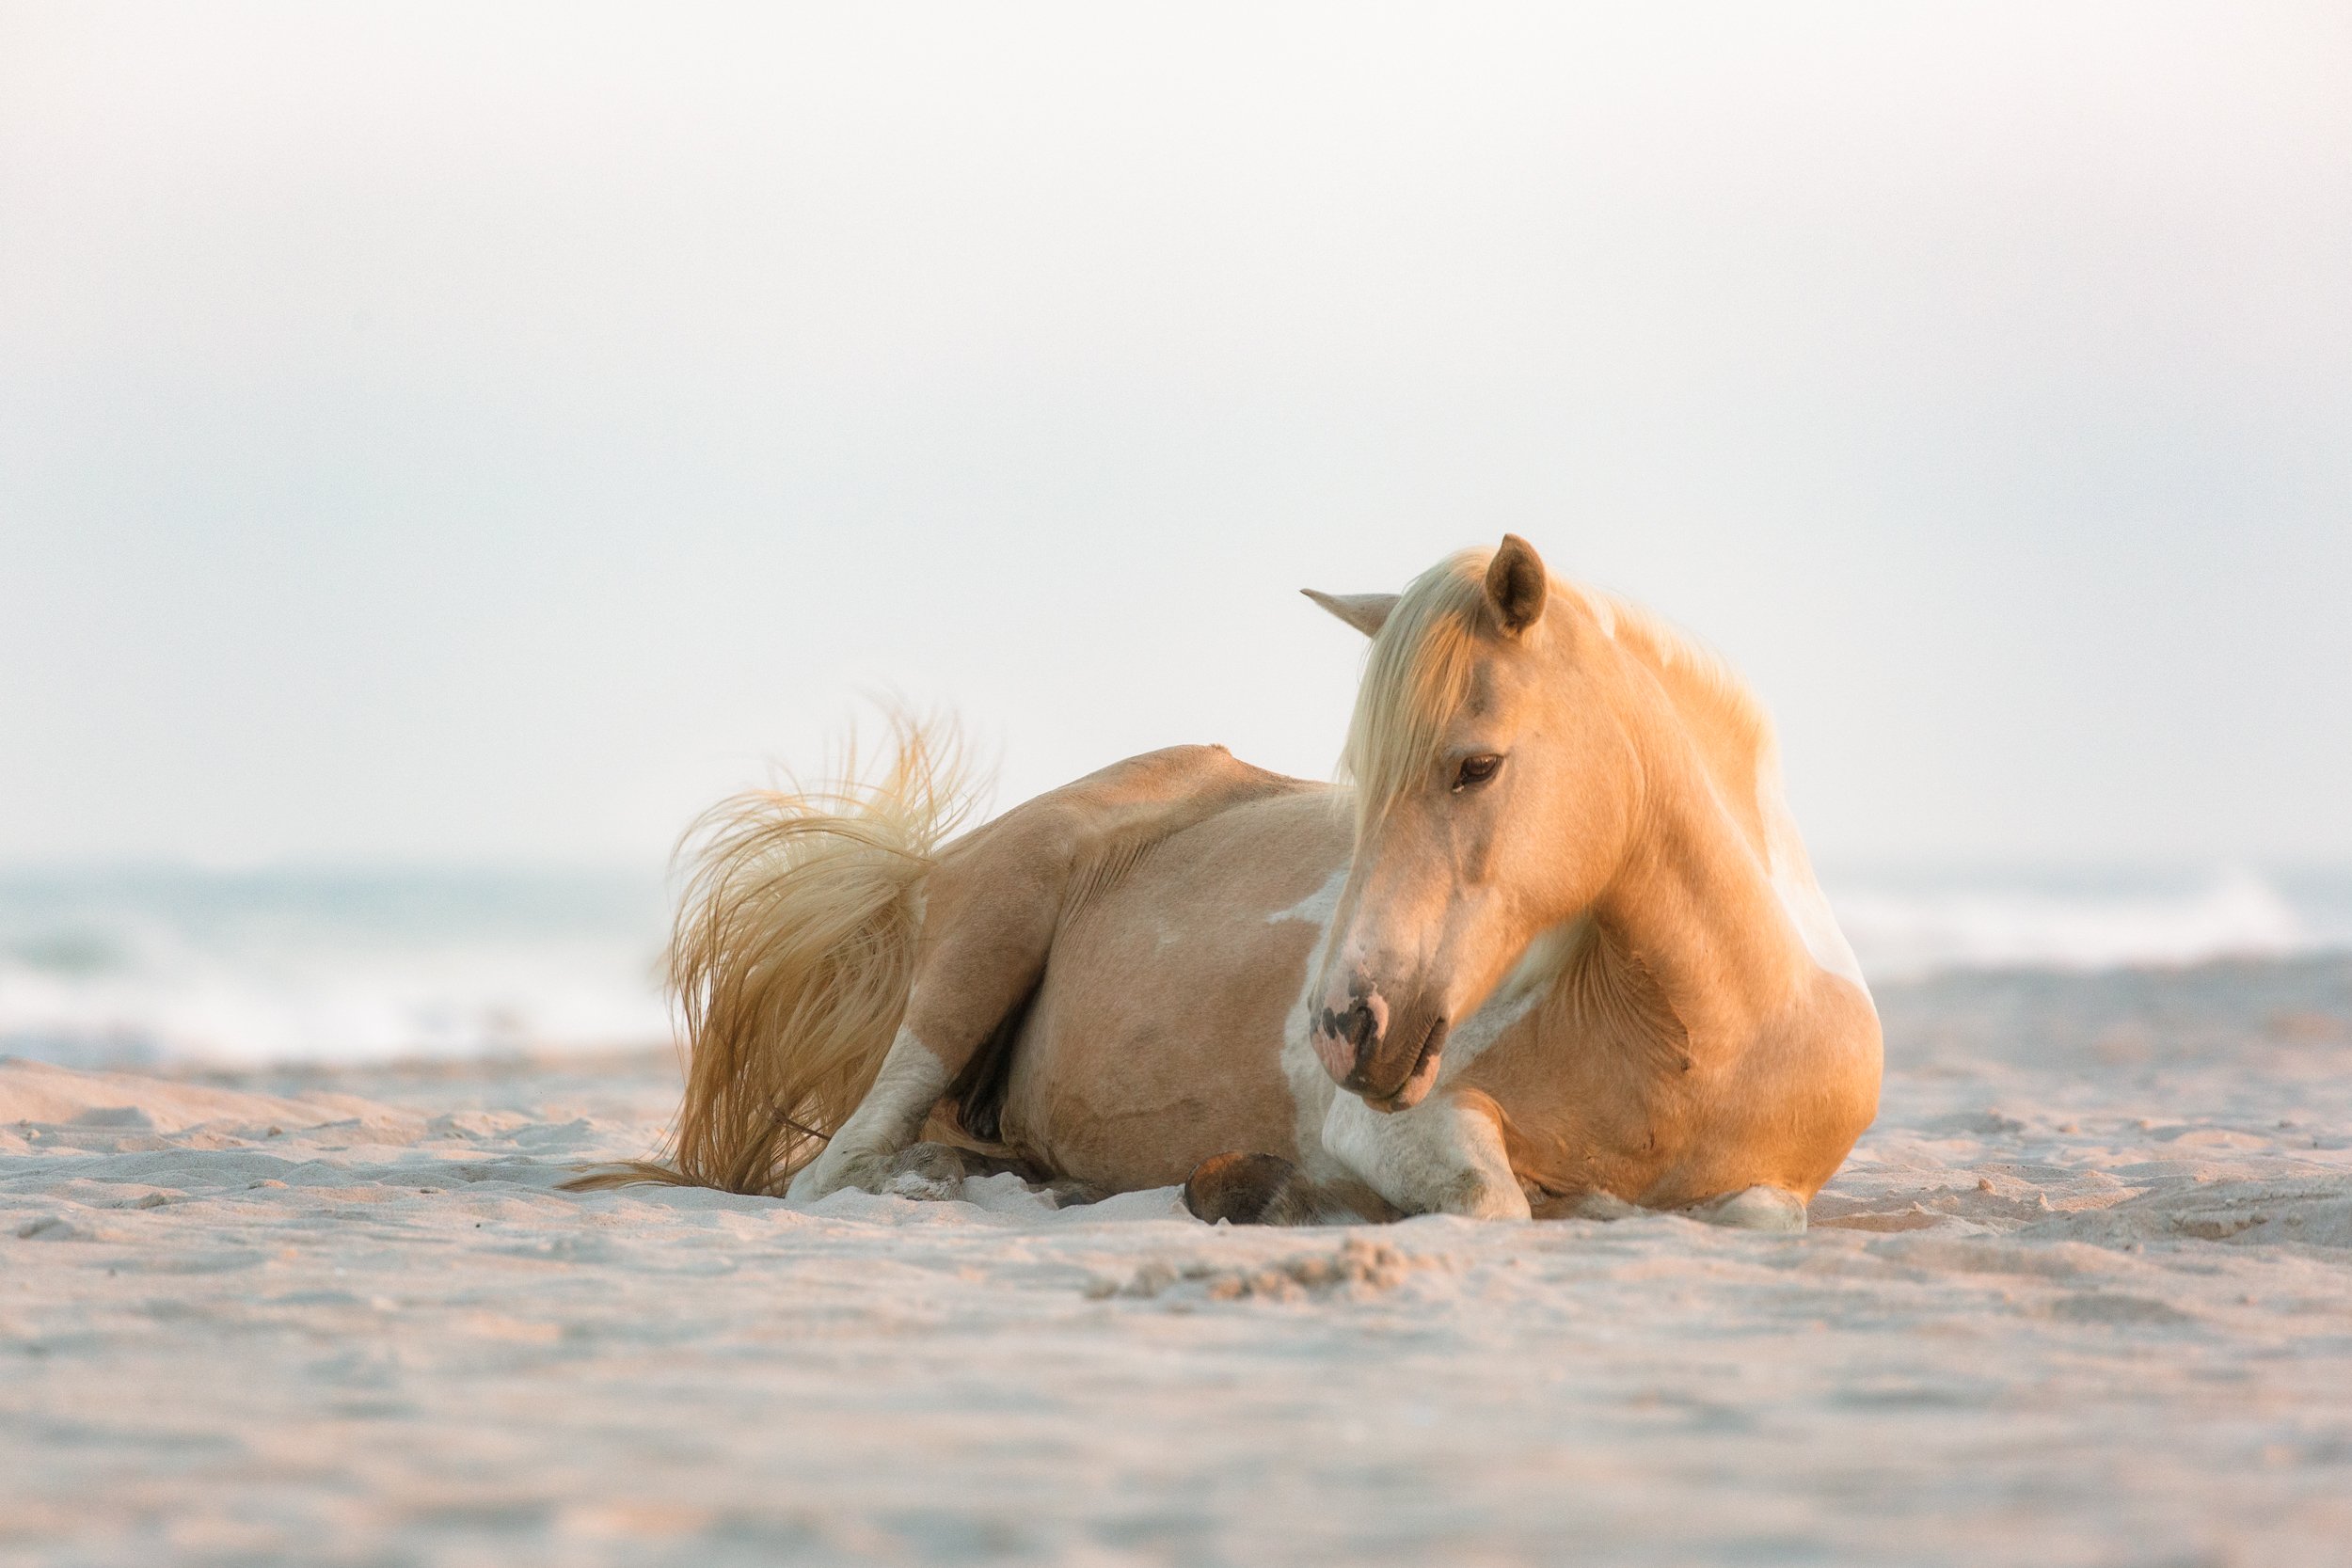 Jane-Sikorski-horse-photographer-2125.jpg